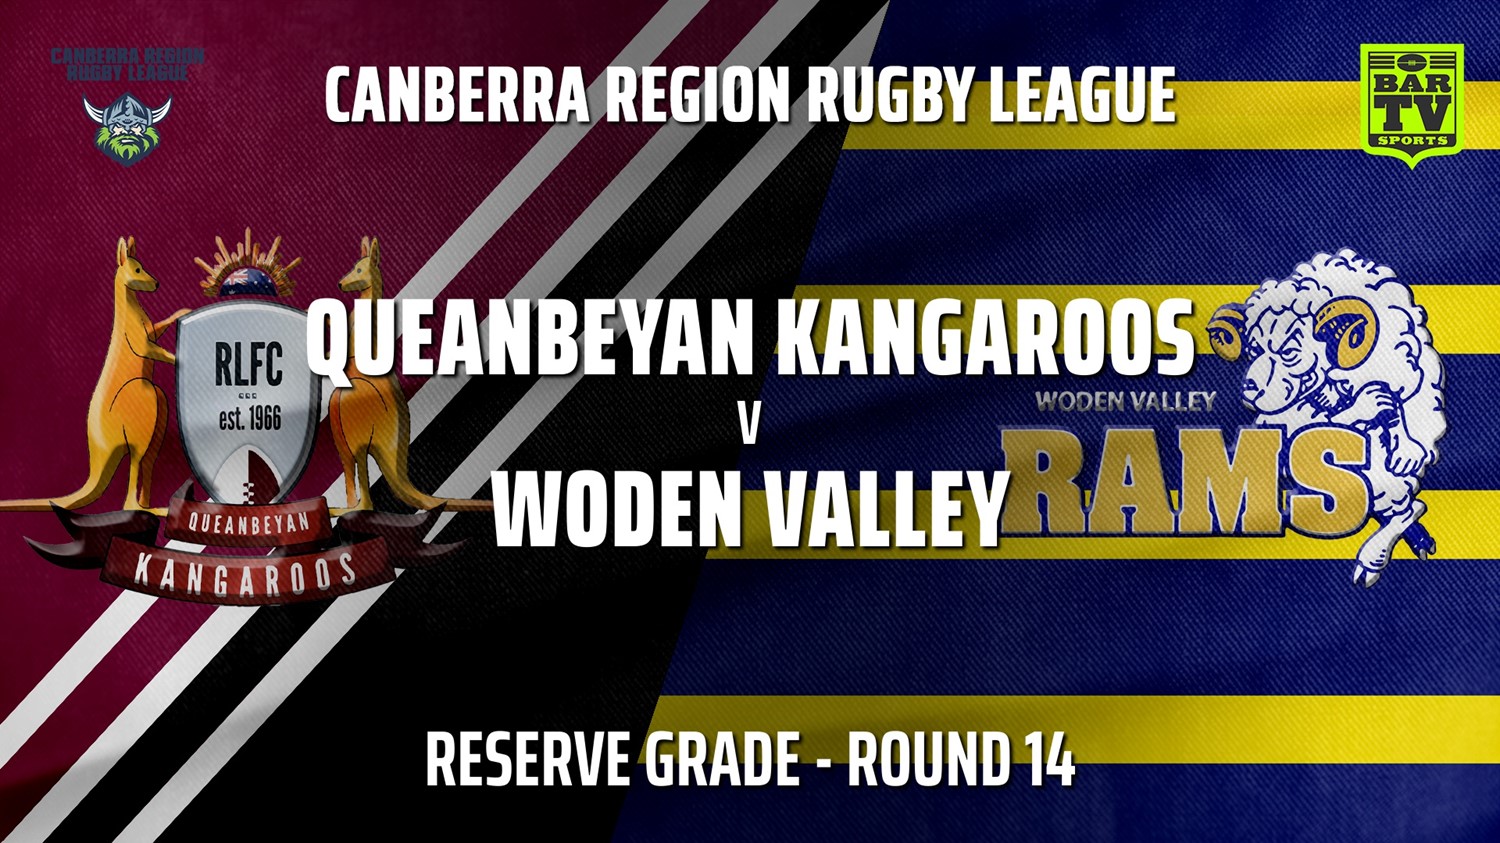 210731-Canberra Round 14 - Reserve Grade - Queanbeyan Kangaroos v Woden Valley Rams Slate Image